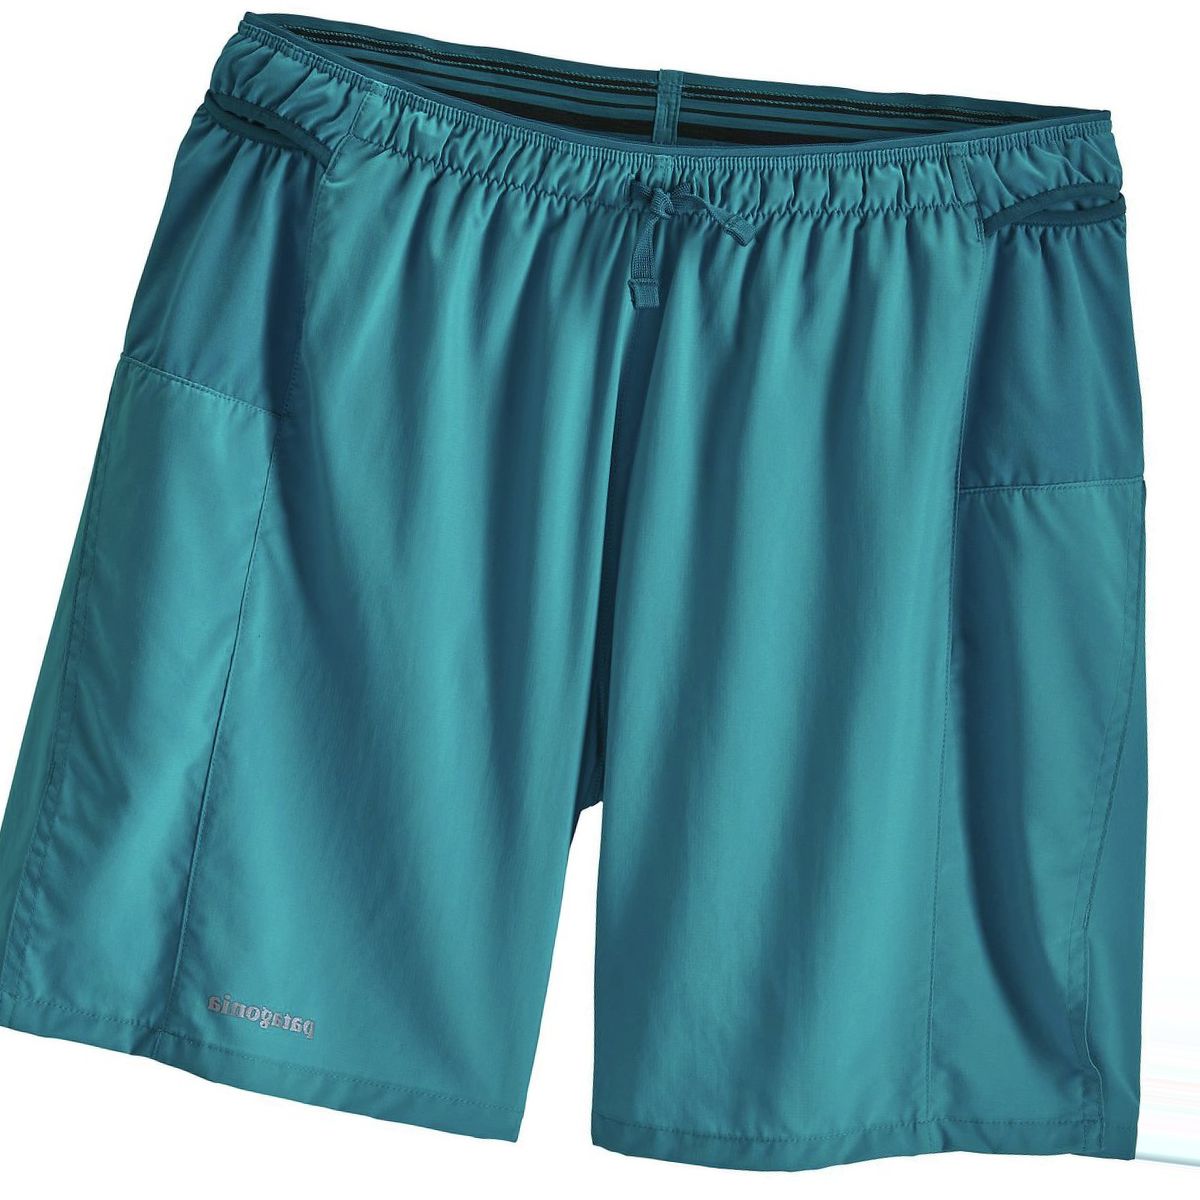 Patagonia Strider Pro 7in Shorts - Men's